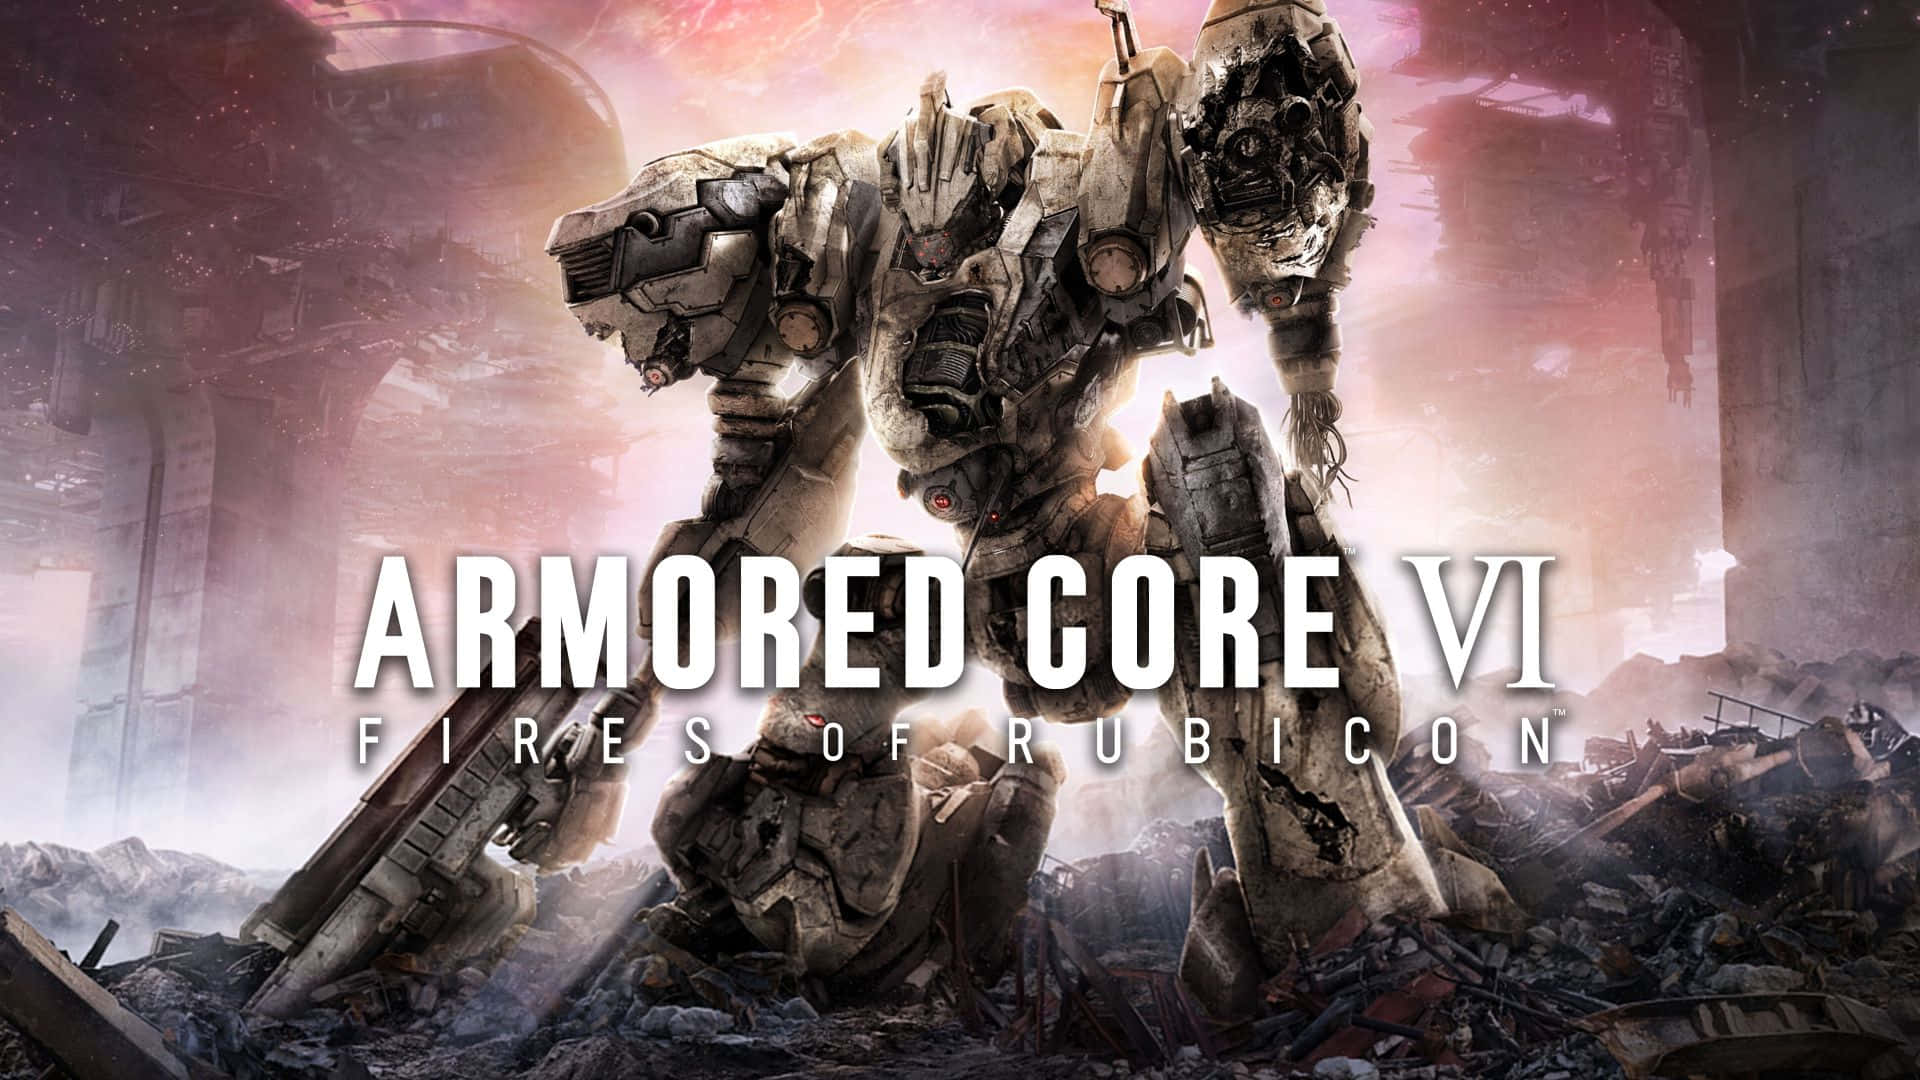 Armored Core V I Firesof Rubicon Artwork Wallpaper